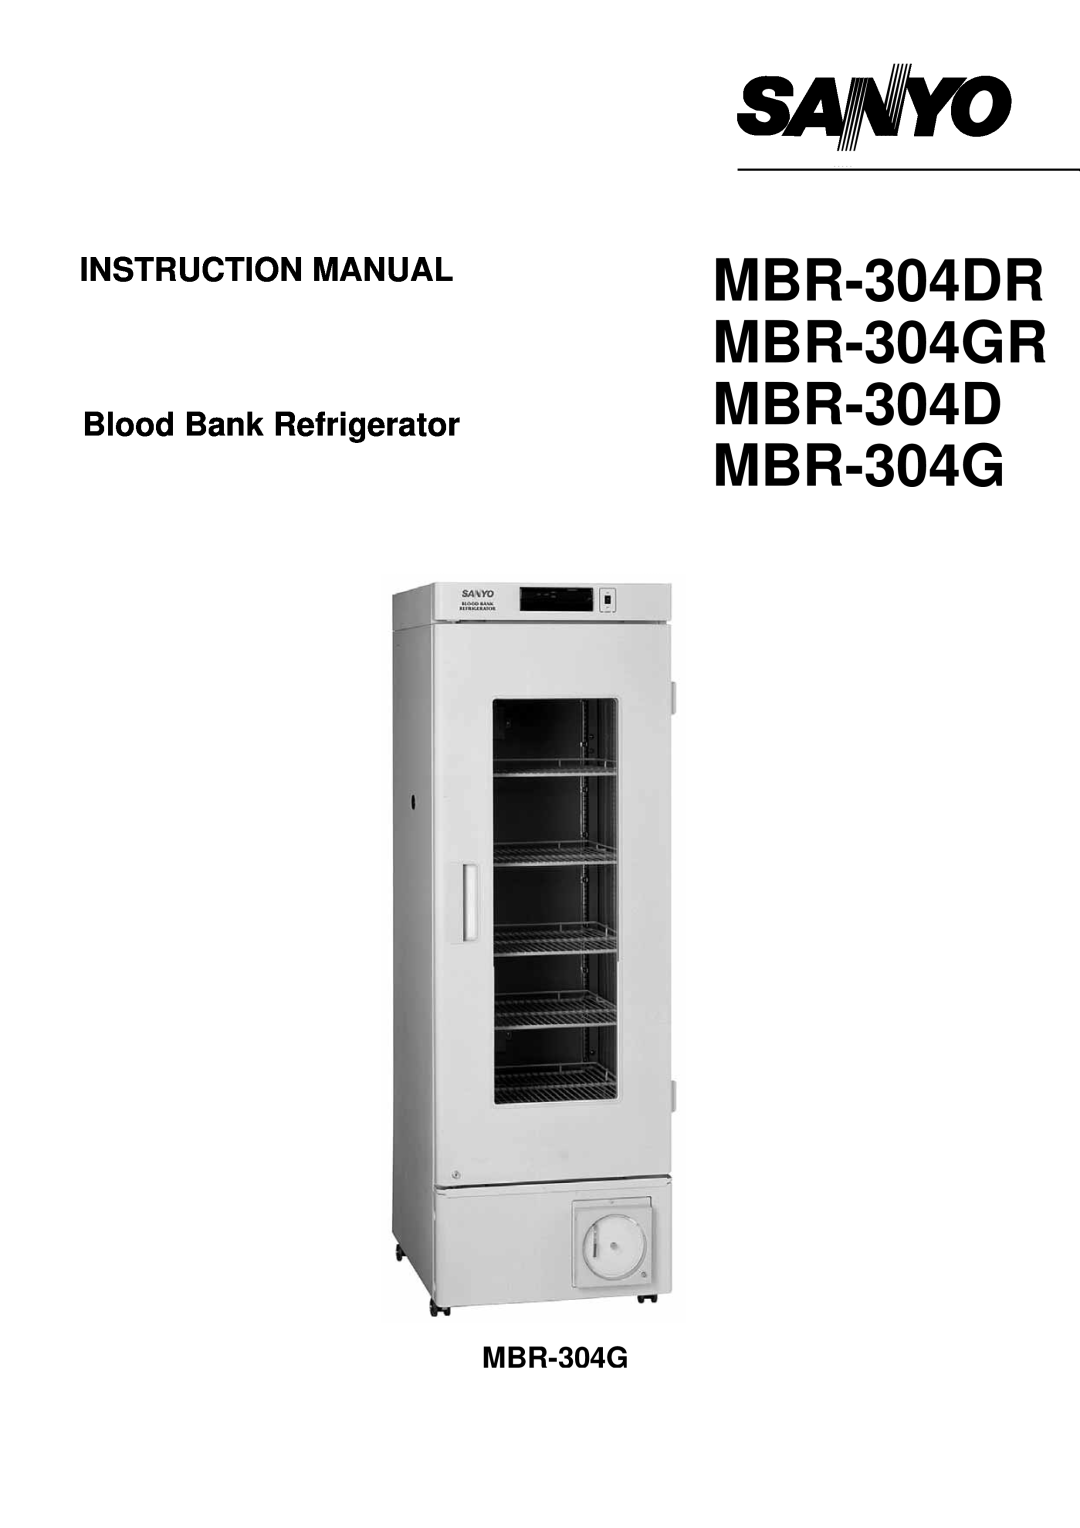 Sanyo instruction manual MBR-304DR MBR-304GR MBR-304D MBR-304G 